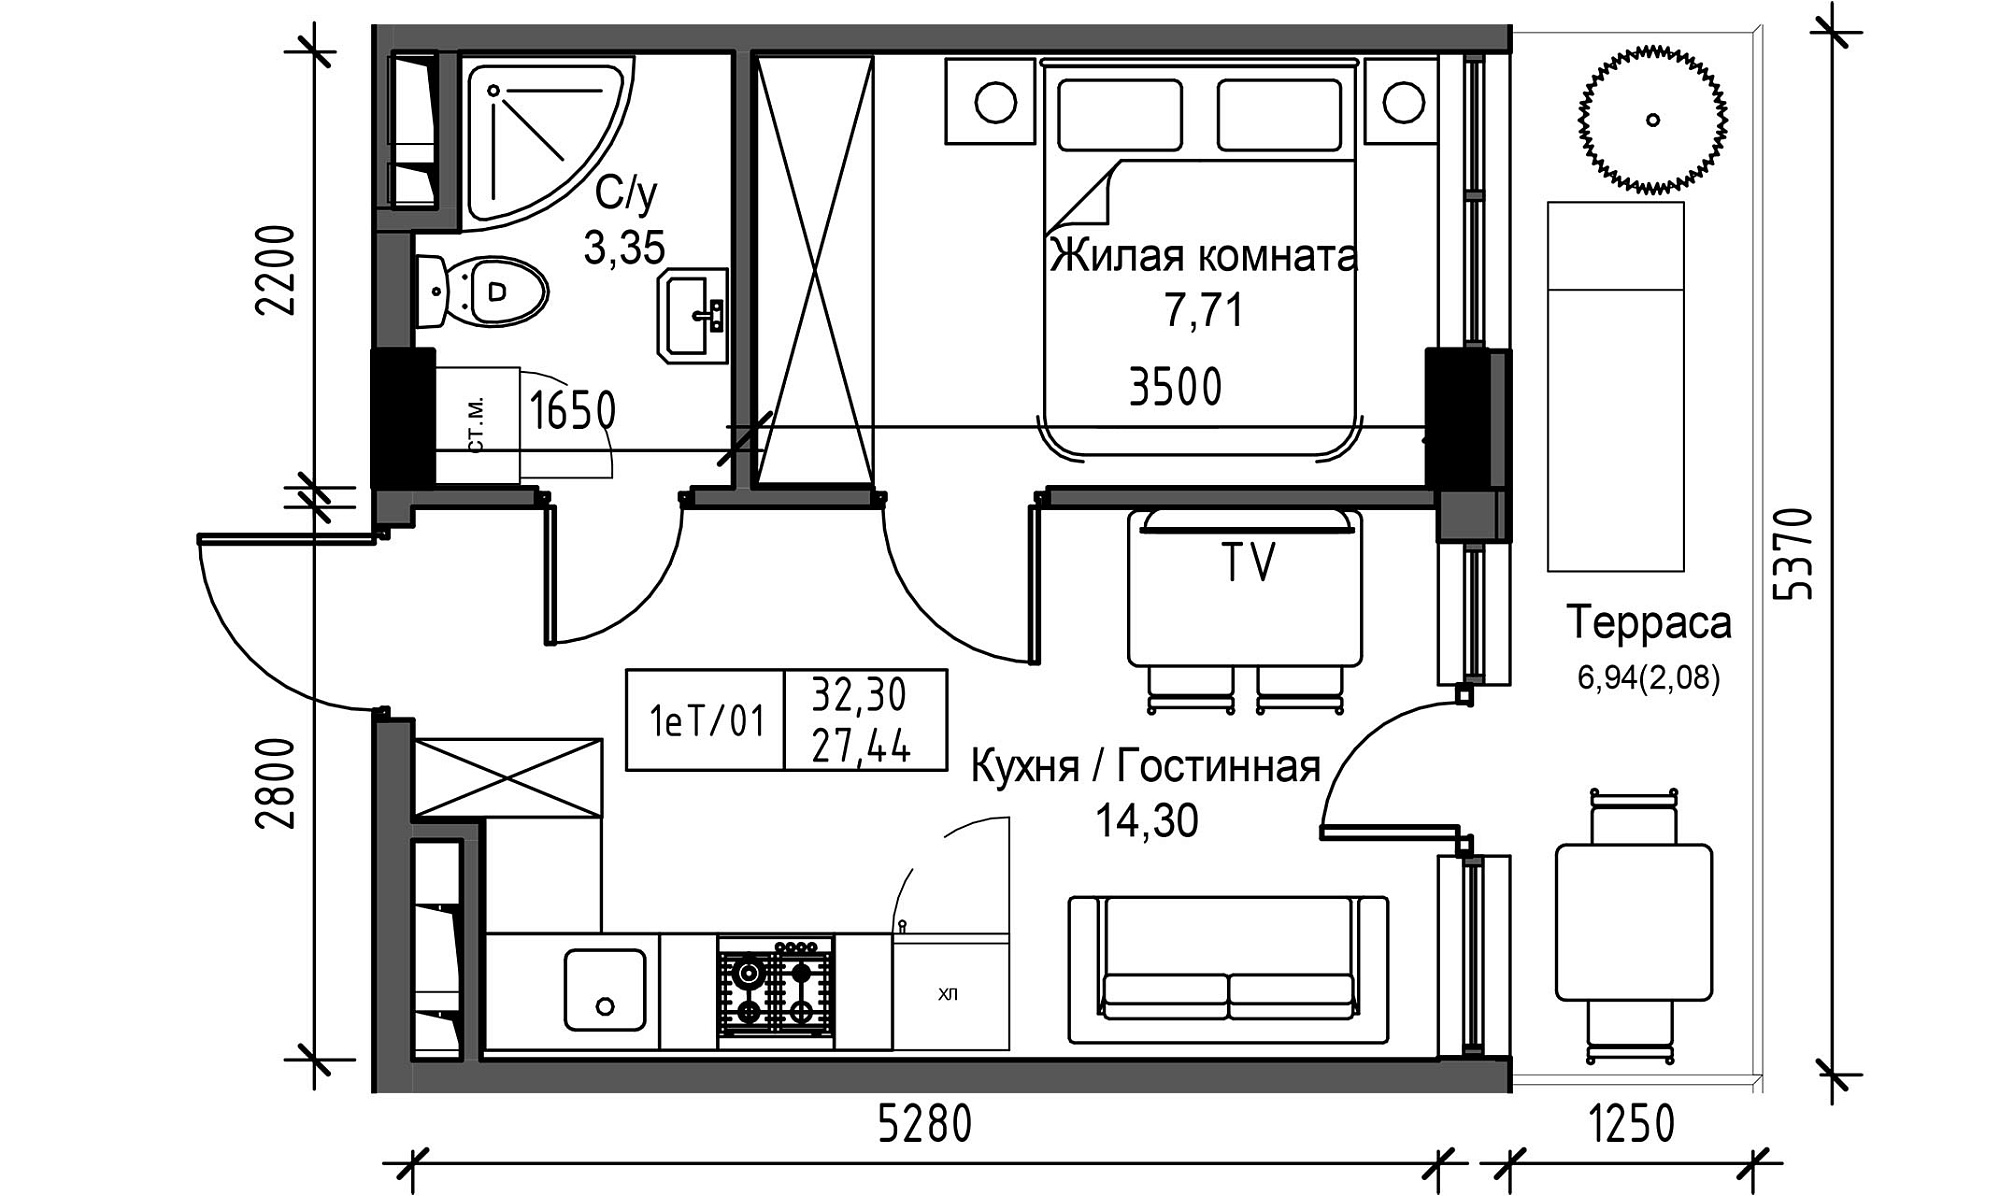 Планування 1-к квартира площею 27.44м2, UM-003-09/0091.